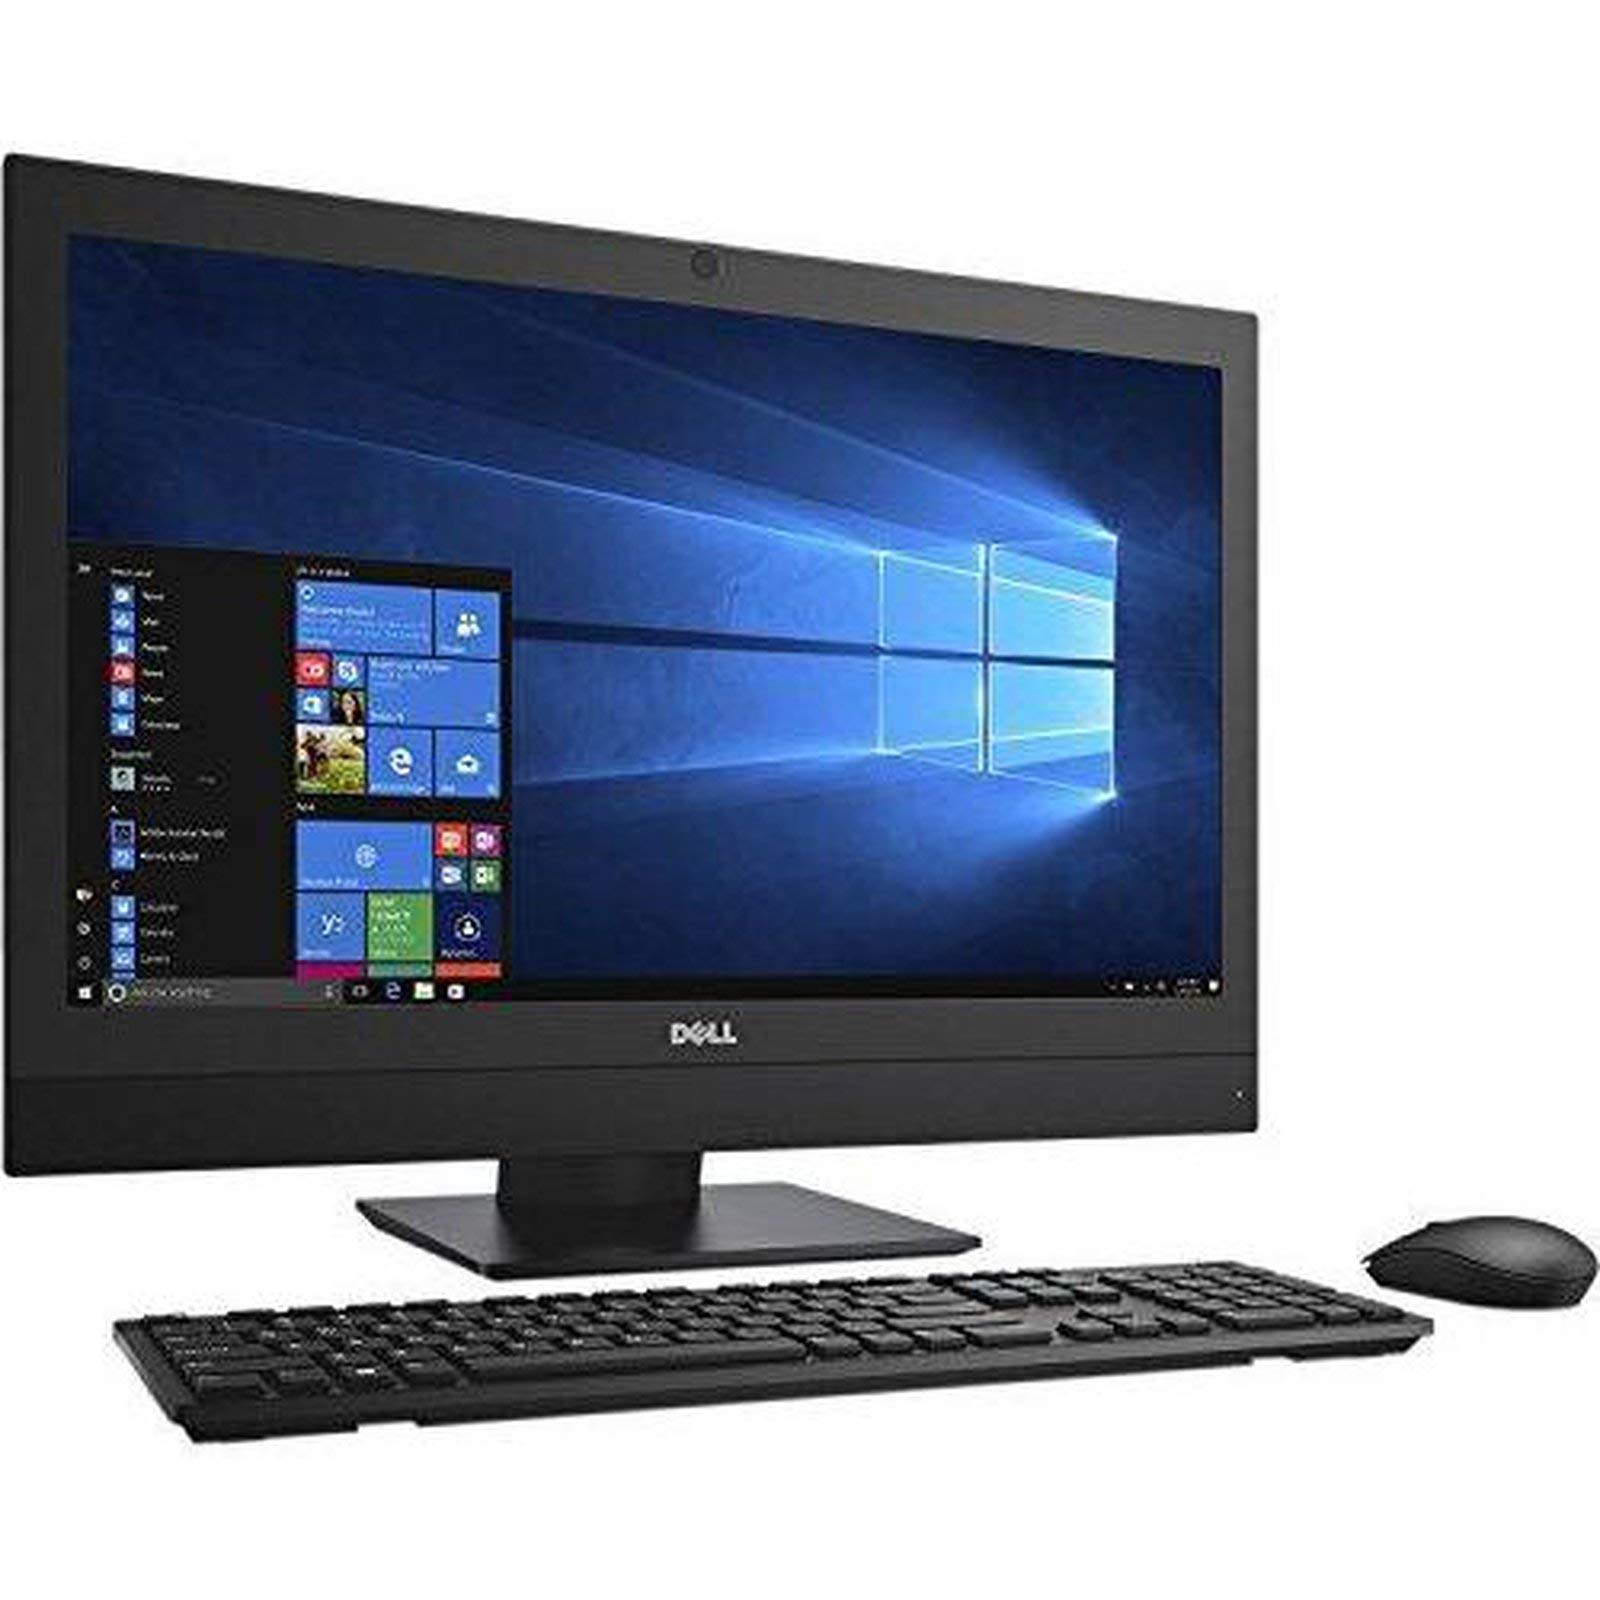 Dell Optiplex 7450 FHD 24 inches Touch Screen All in One Computer PC (Intel Quad Core i5-7500, 8GB Ram, 500GB HDD, HDMI, Camera, WiFi, DVD-RW) Win10 Pro (Renewed)